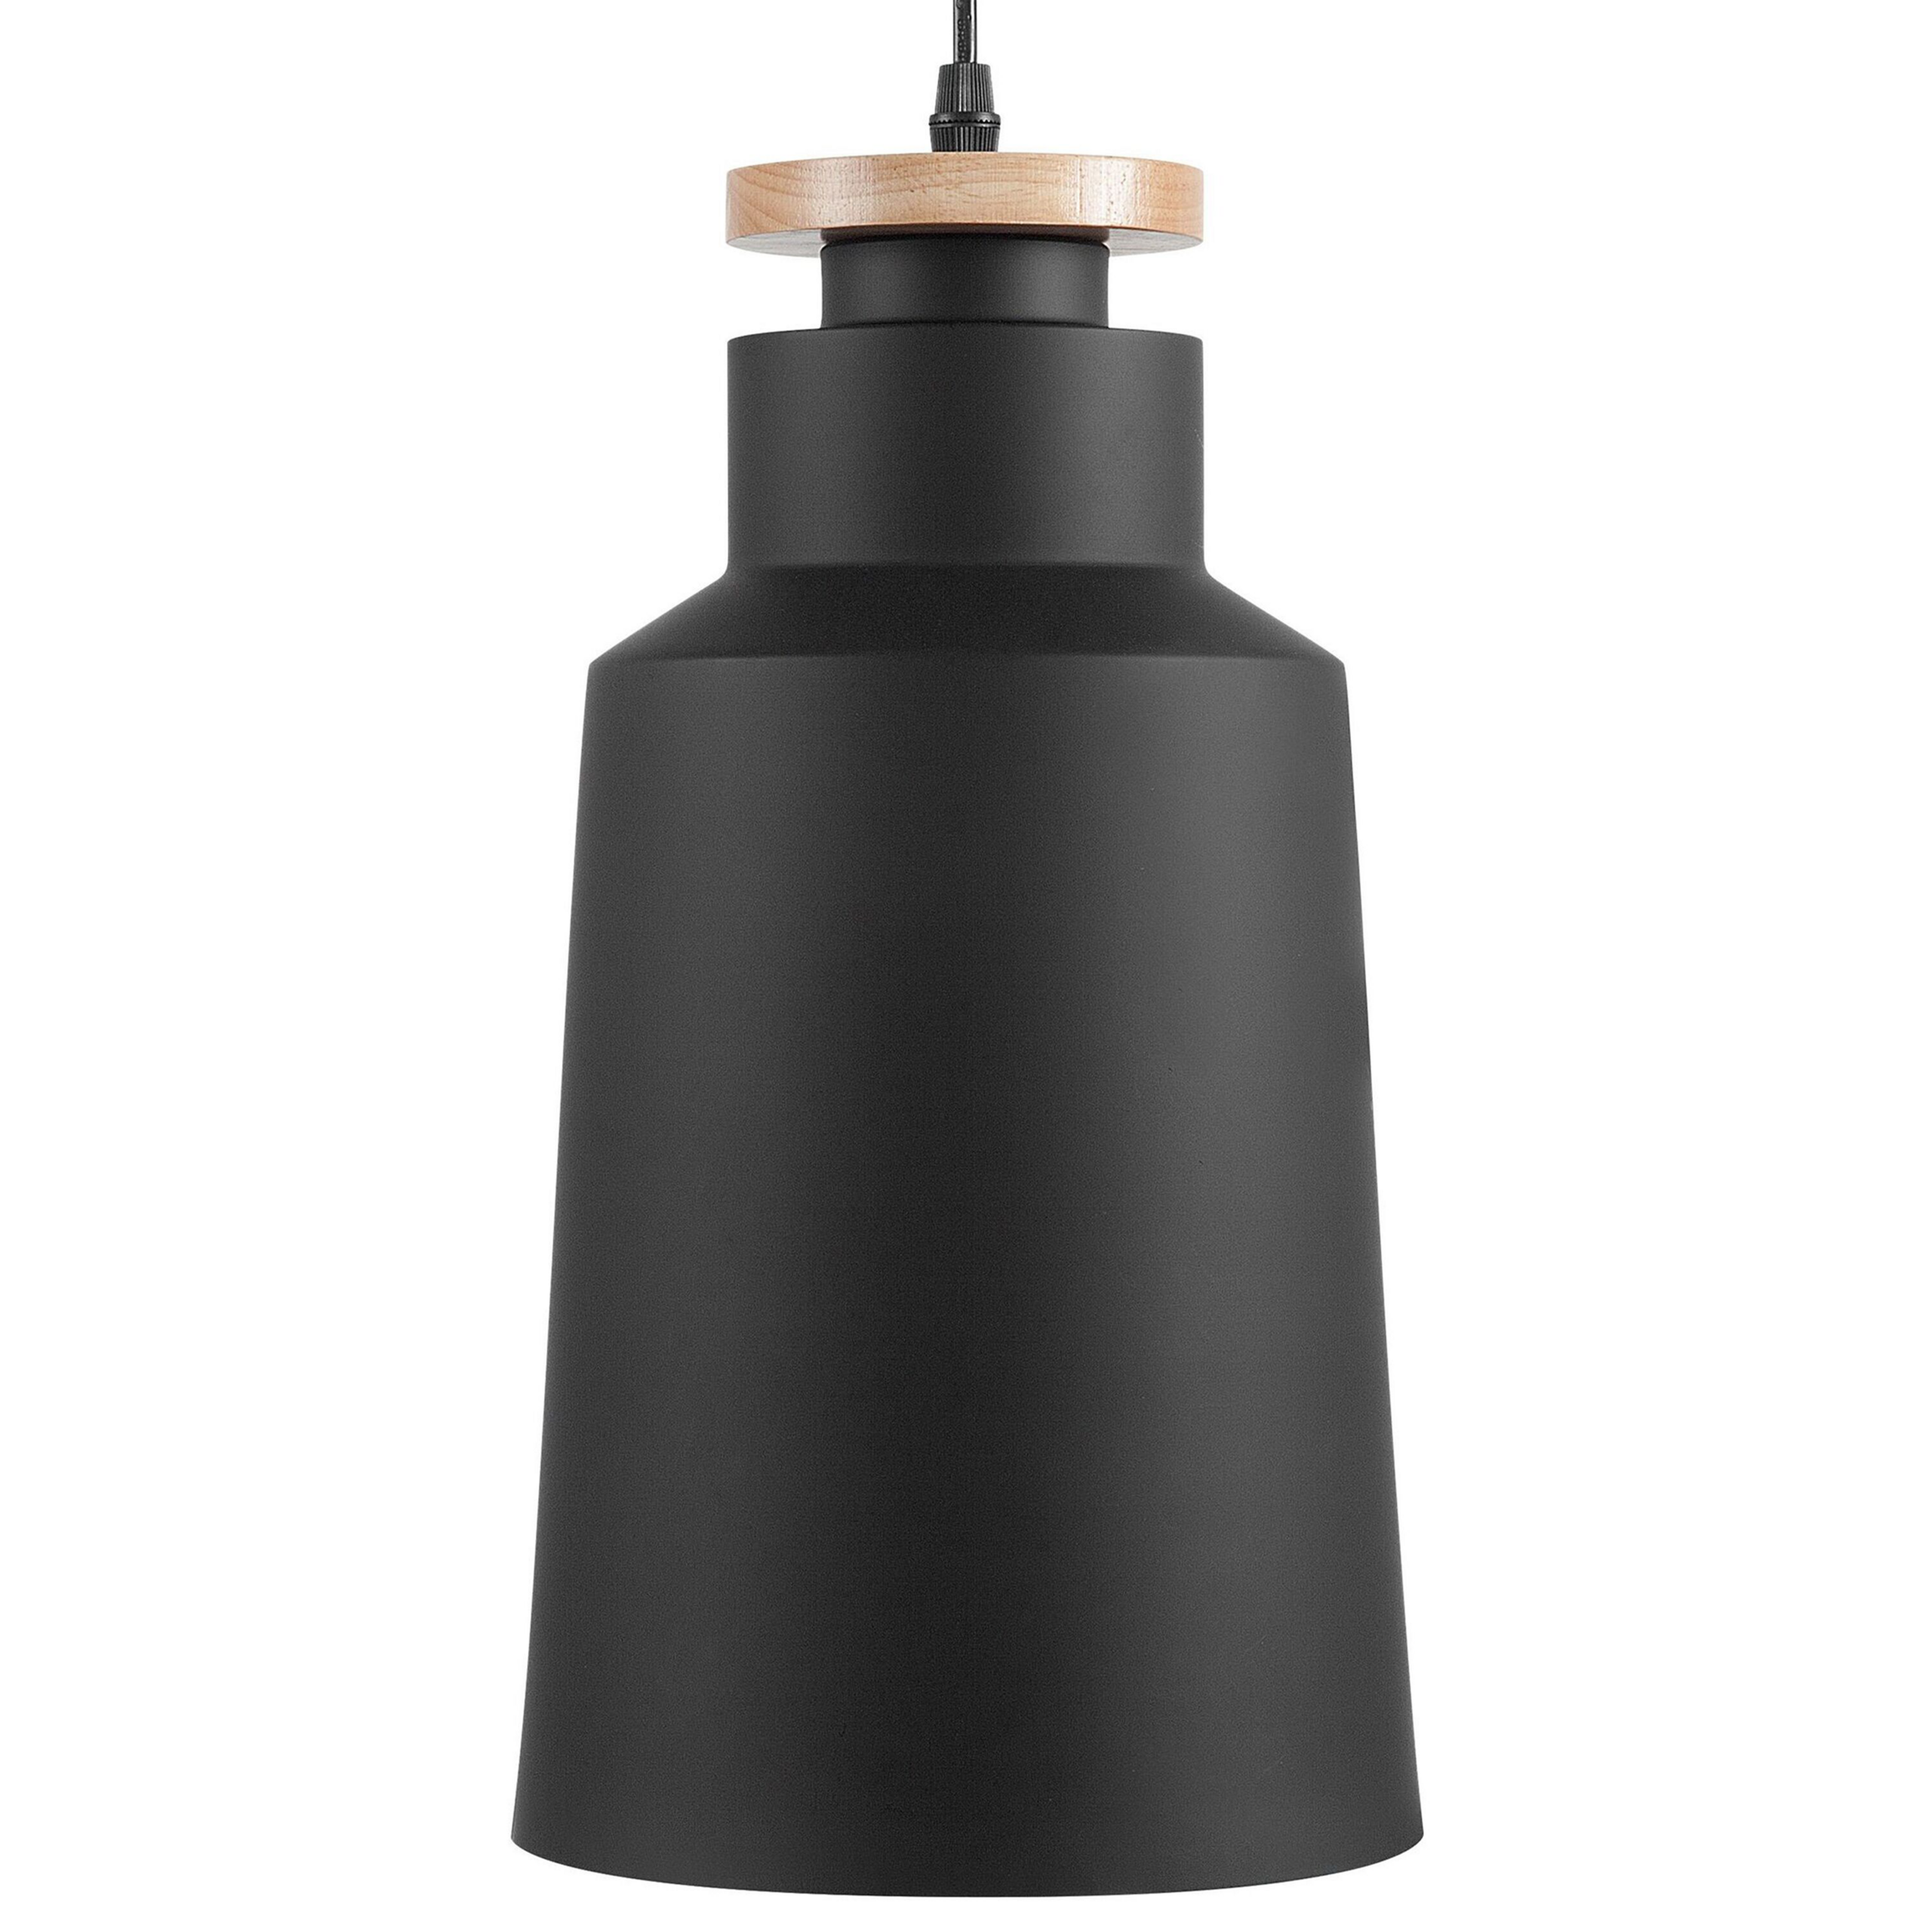 Beliani Candeeiro de teto suspenso preto alumínio ø 19 cm abajur cónico moderno design minimalista